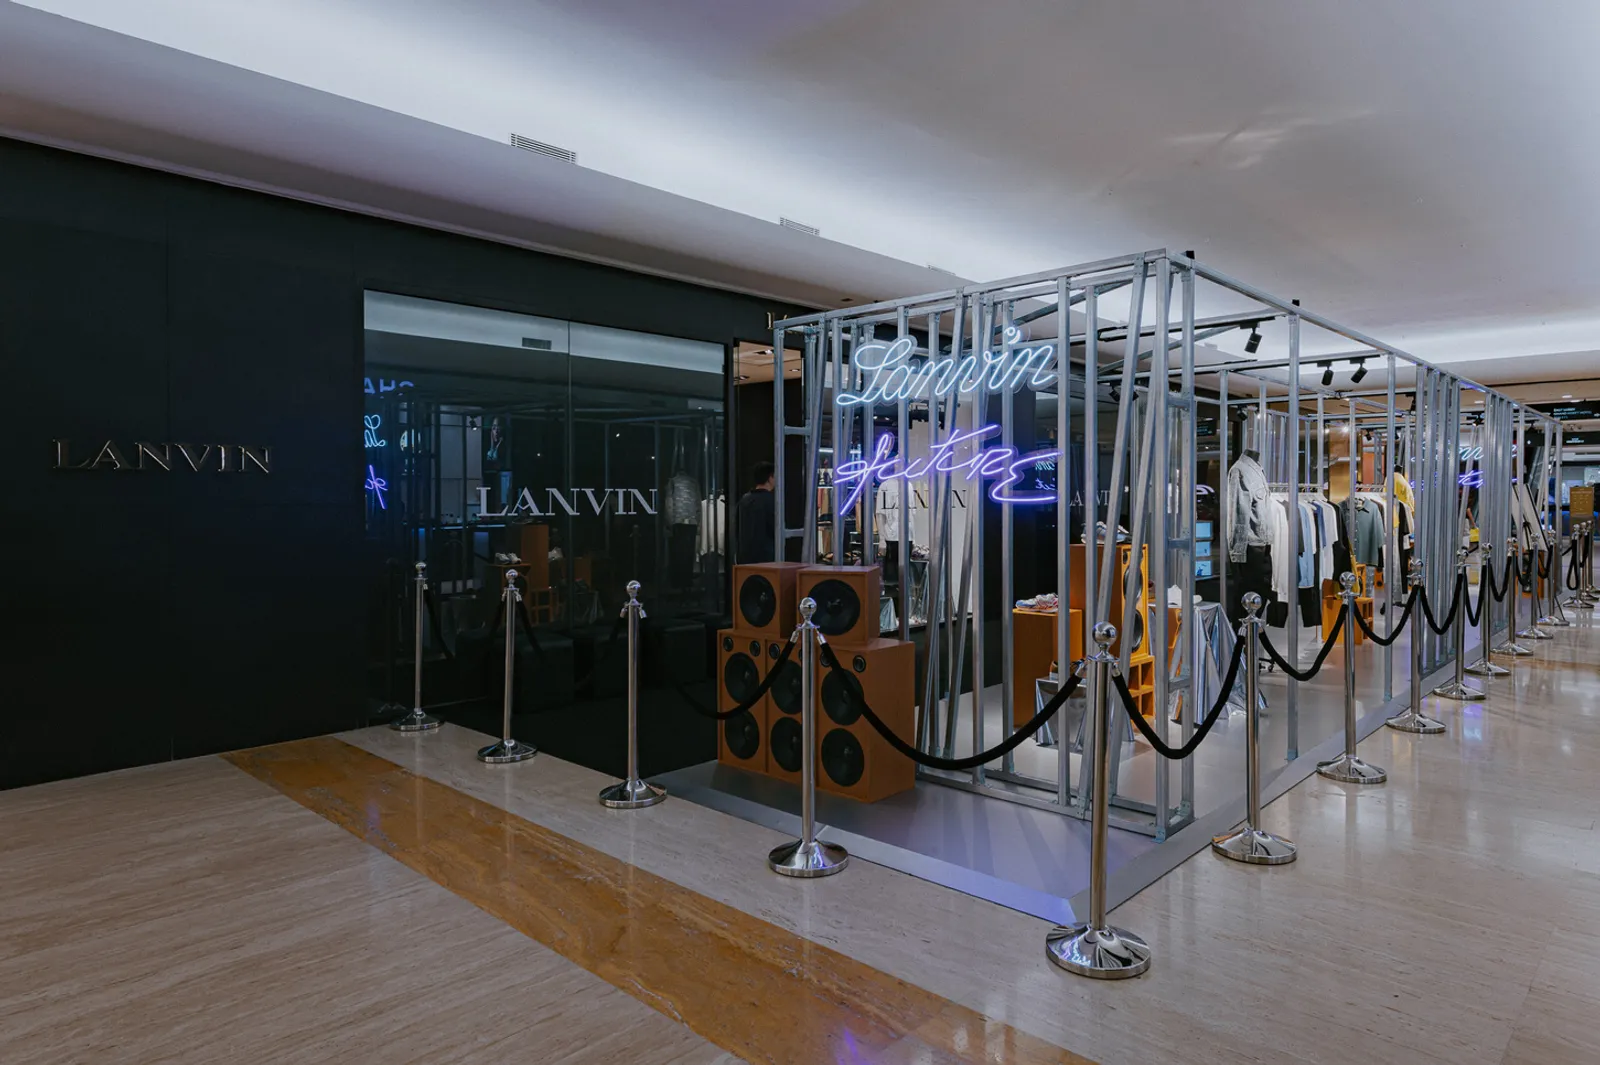 Lanvin Pamerkan Koleksi 'Lanvin x Future' di Plaza Indonesia